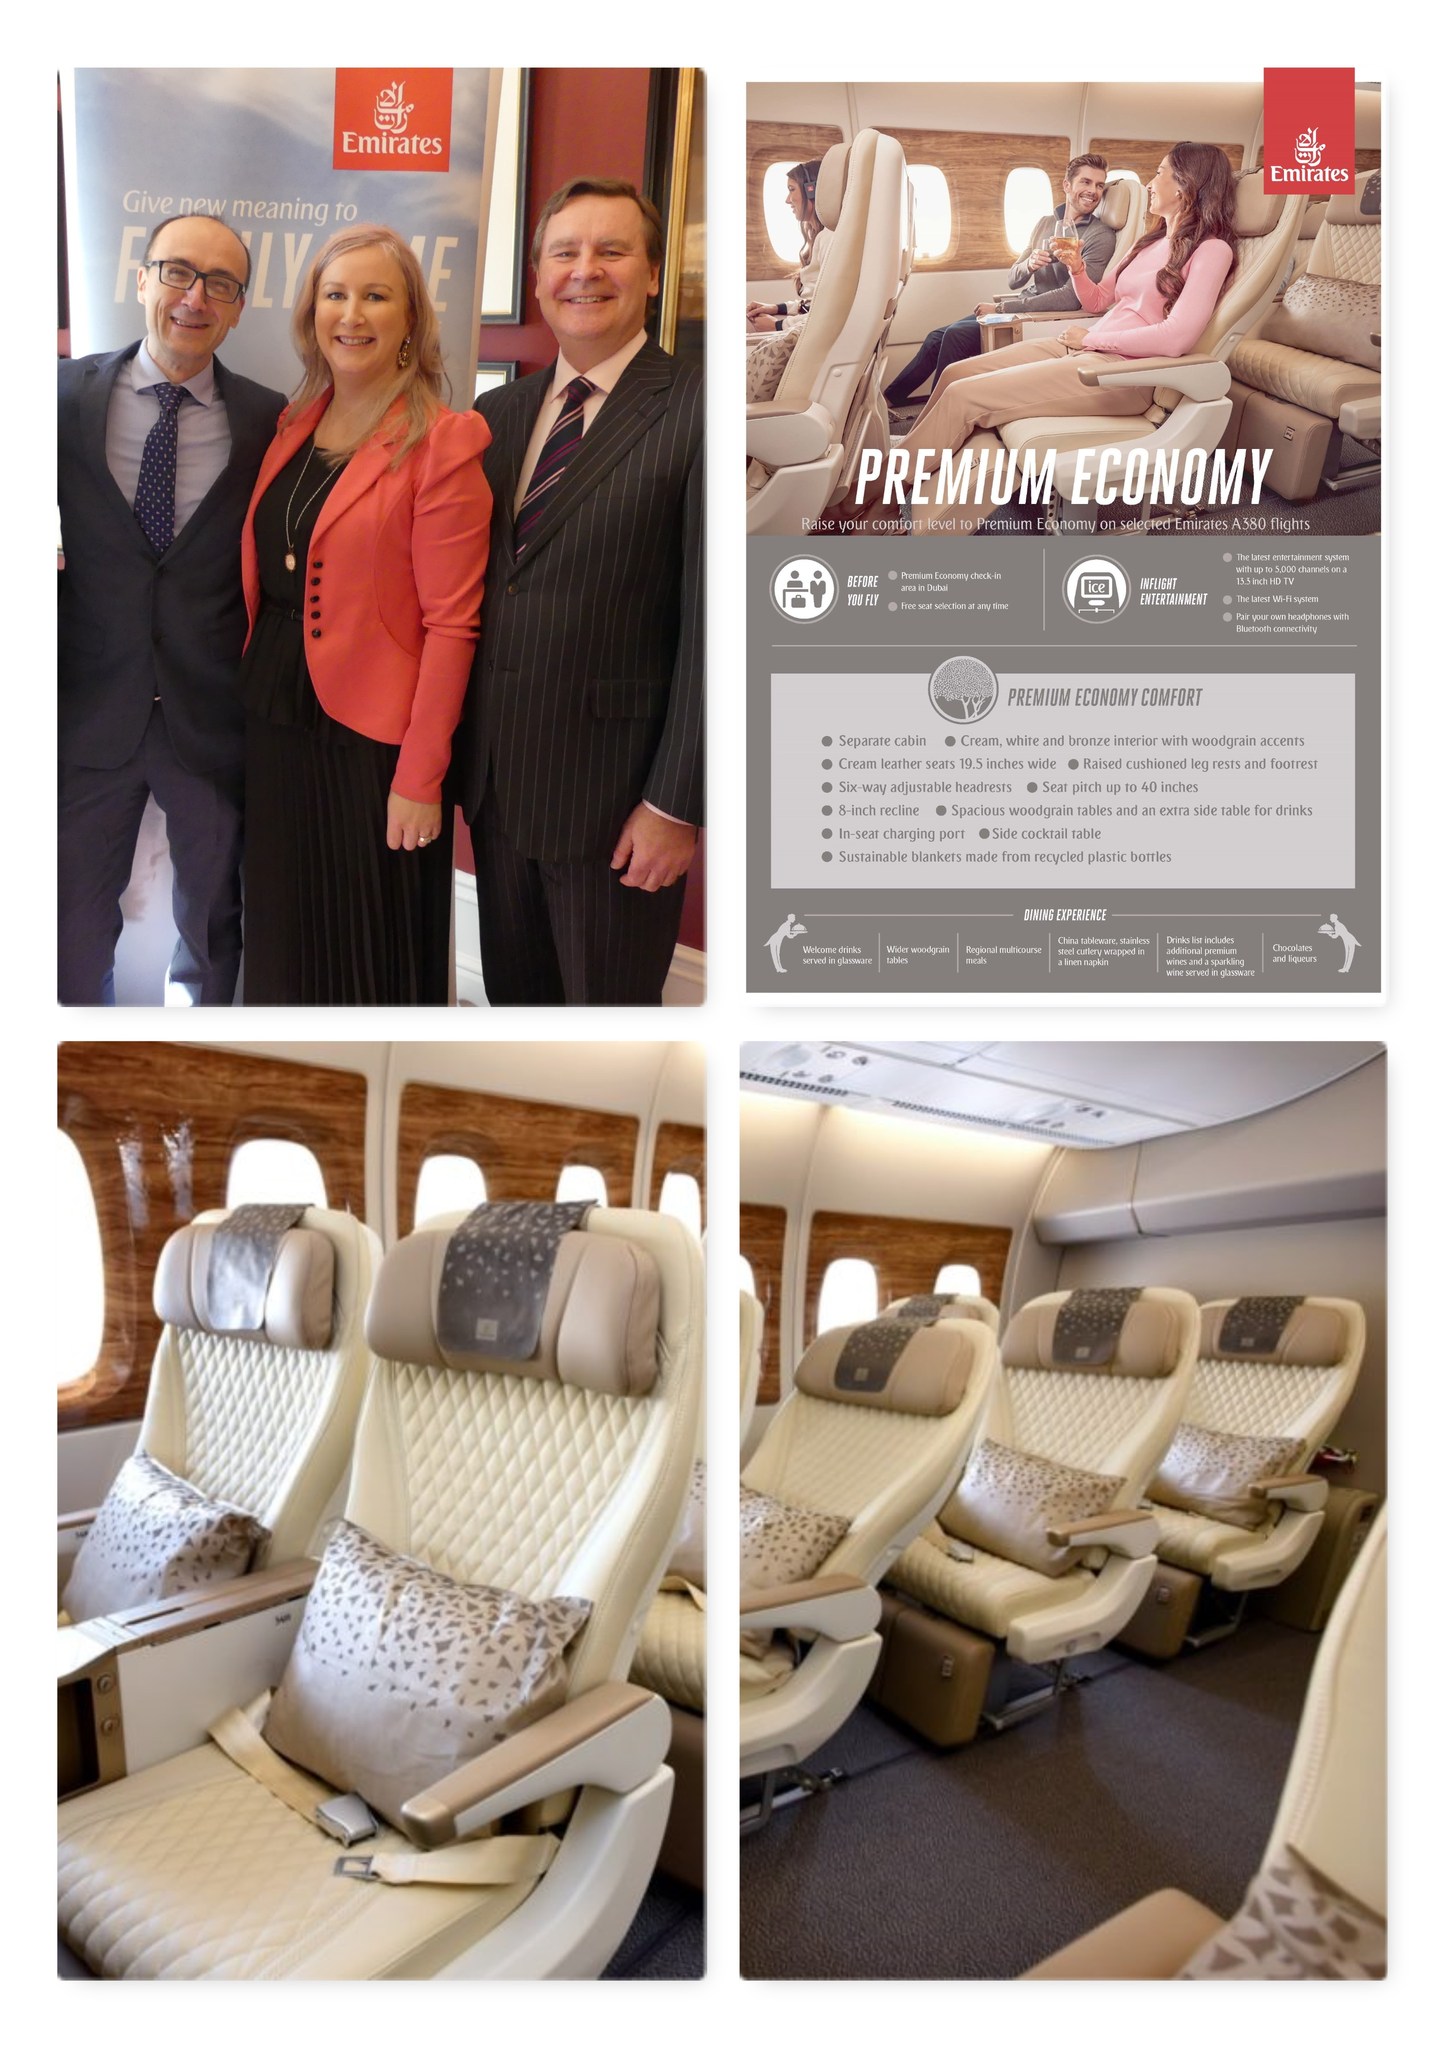 Emirates all new Premium Economy Cabin